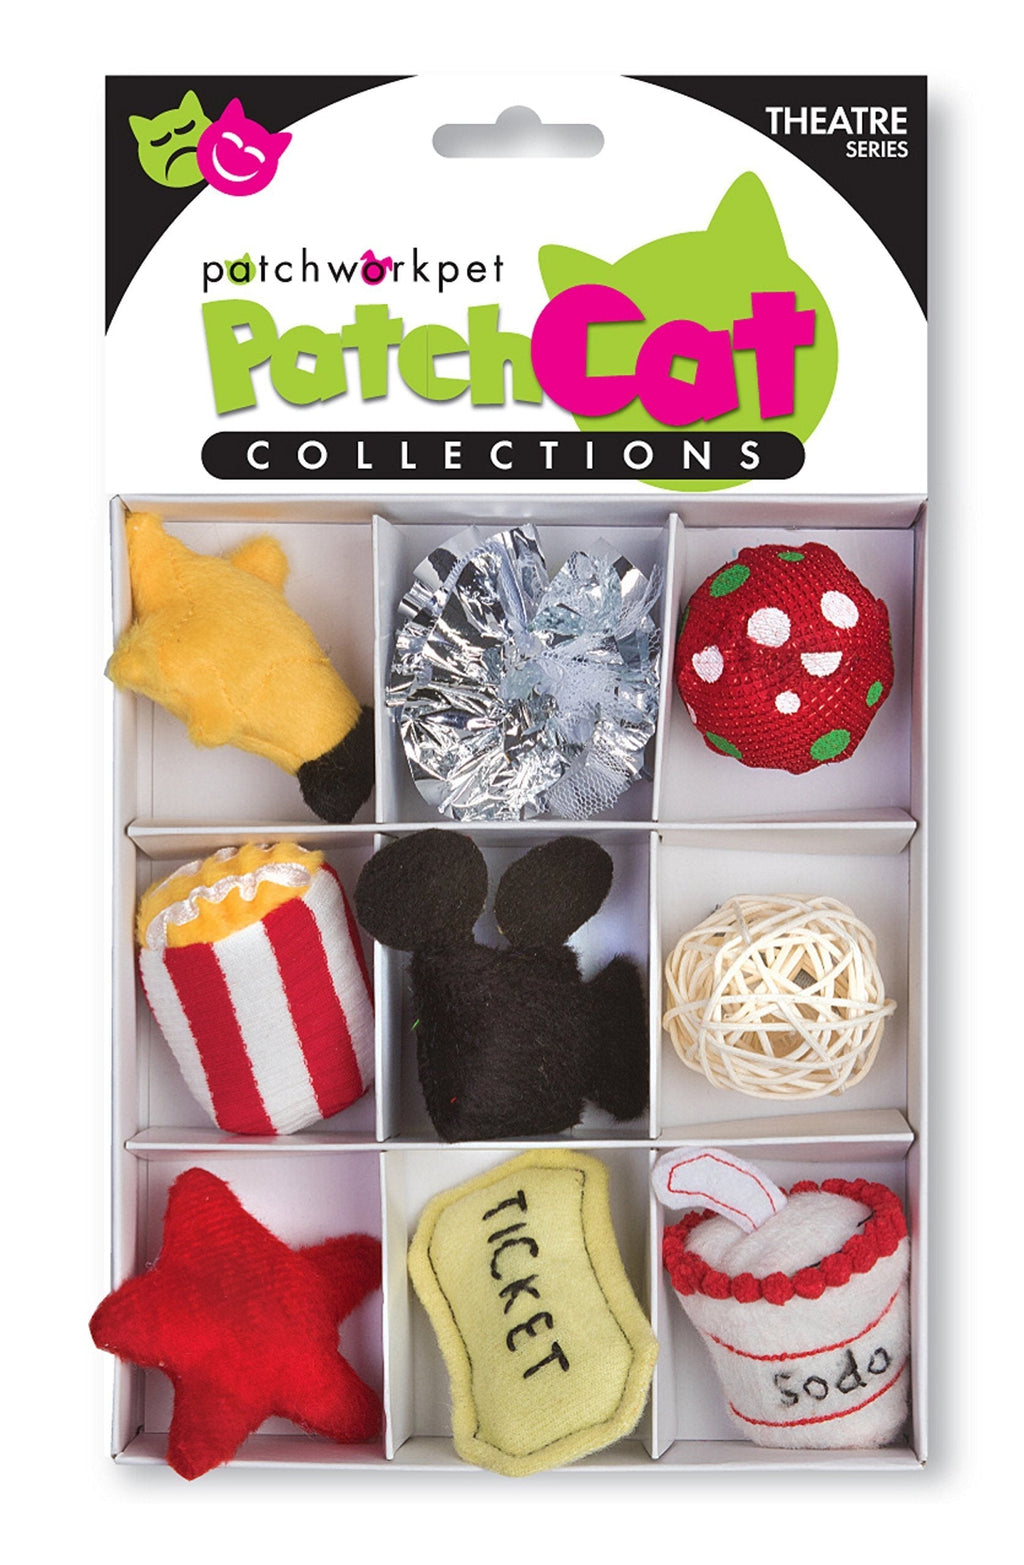 [Australia] - Patchwork Pet Theatre Box, 7" 